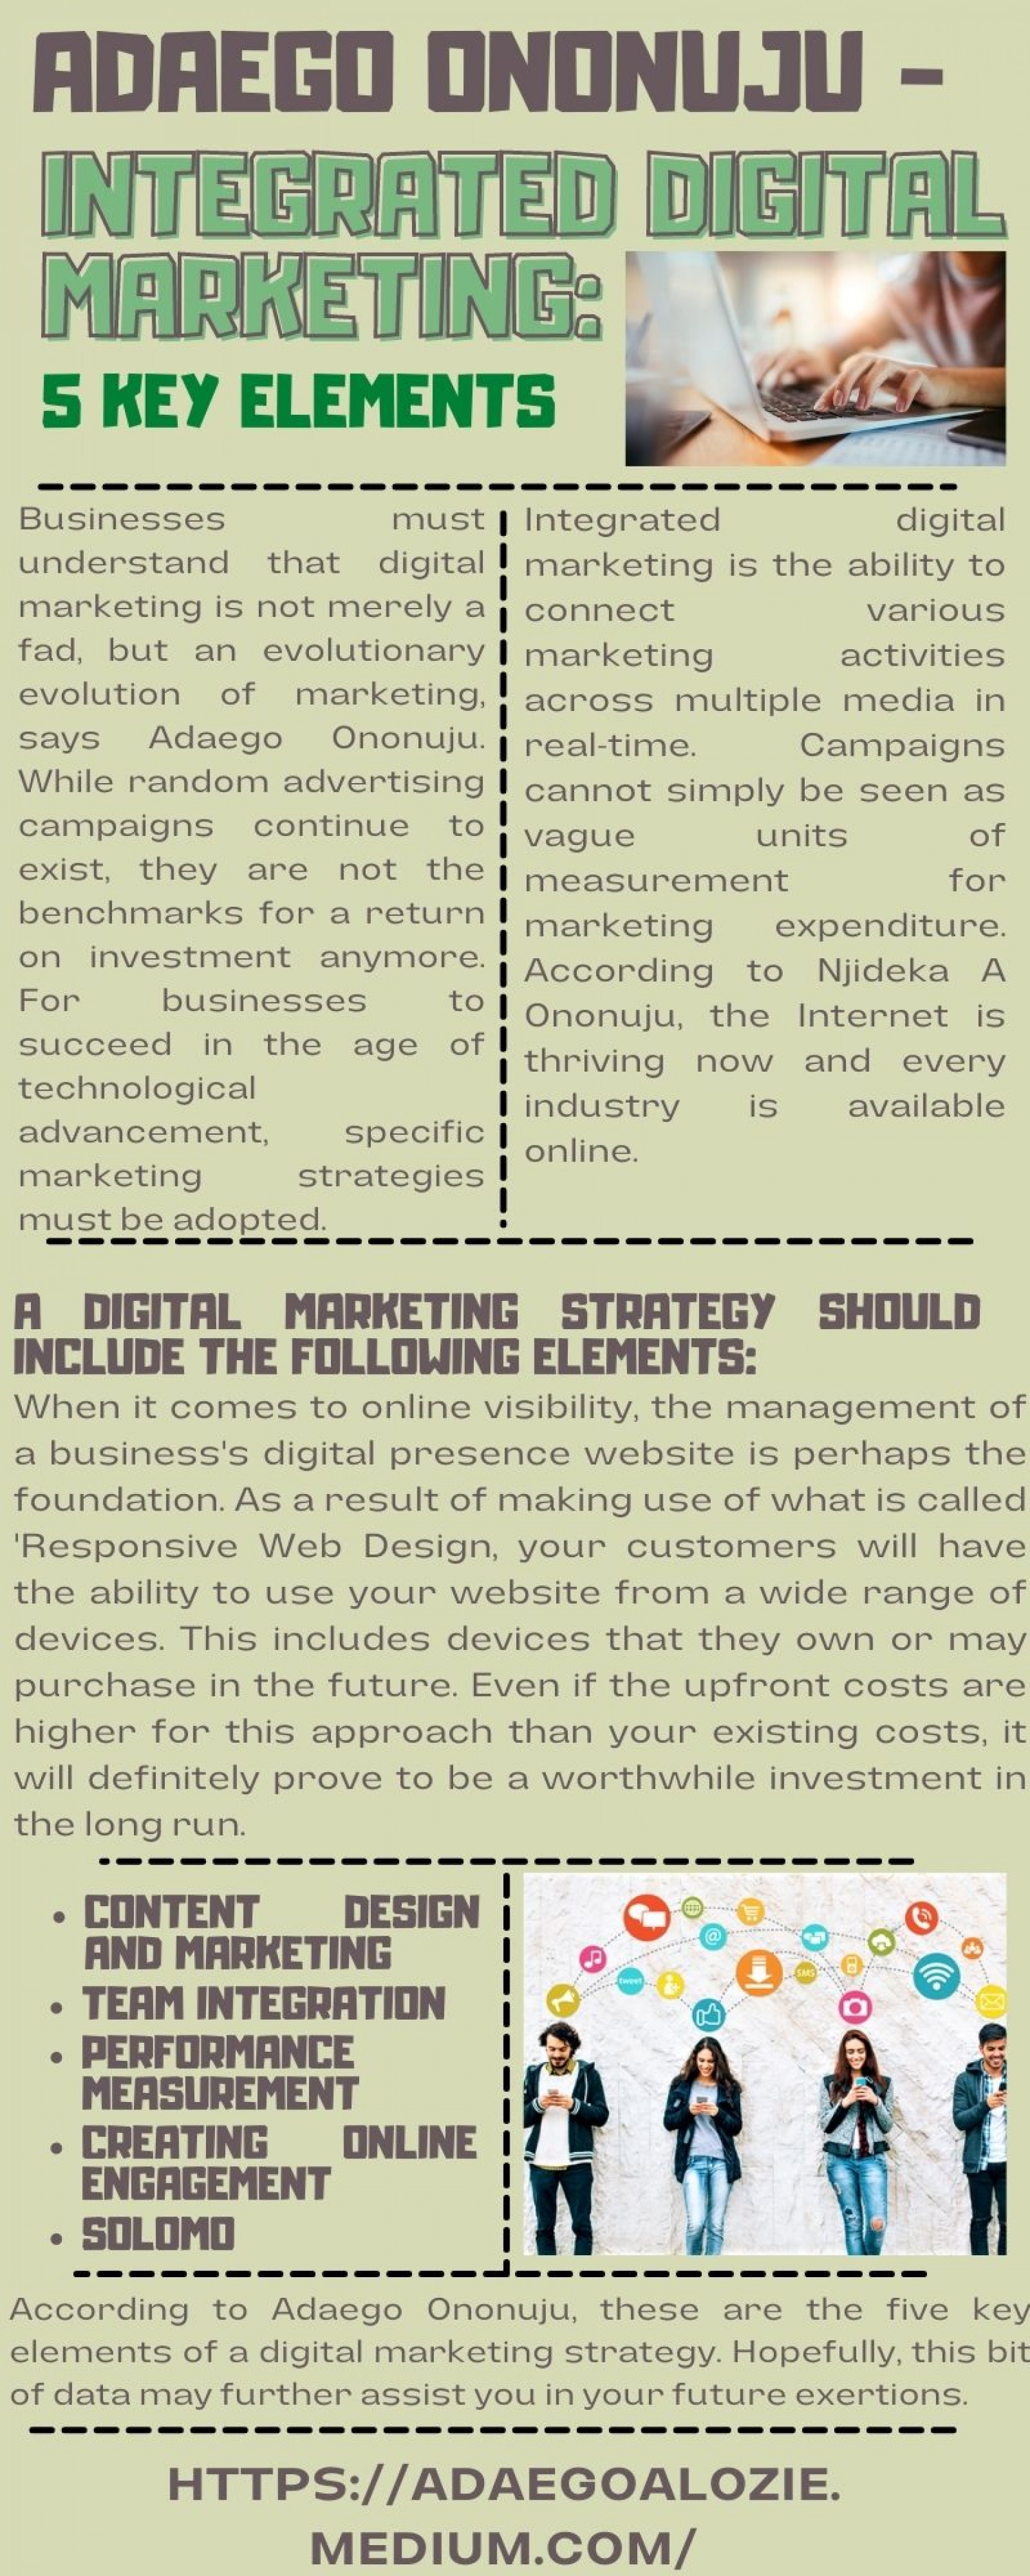 Adaego Ononuju - Integrated Digital Marketing: 5 Key Elements Infographic